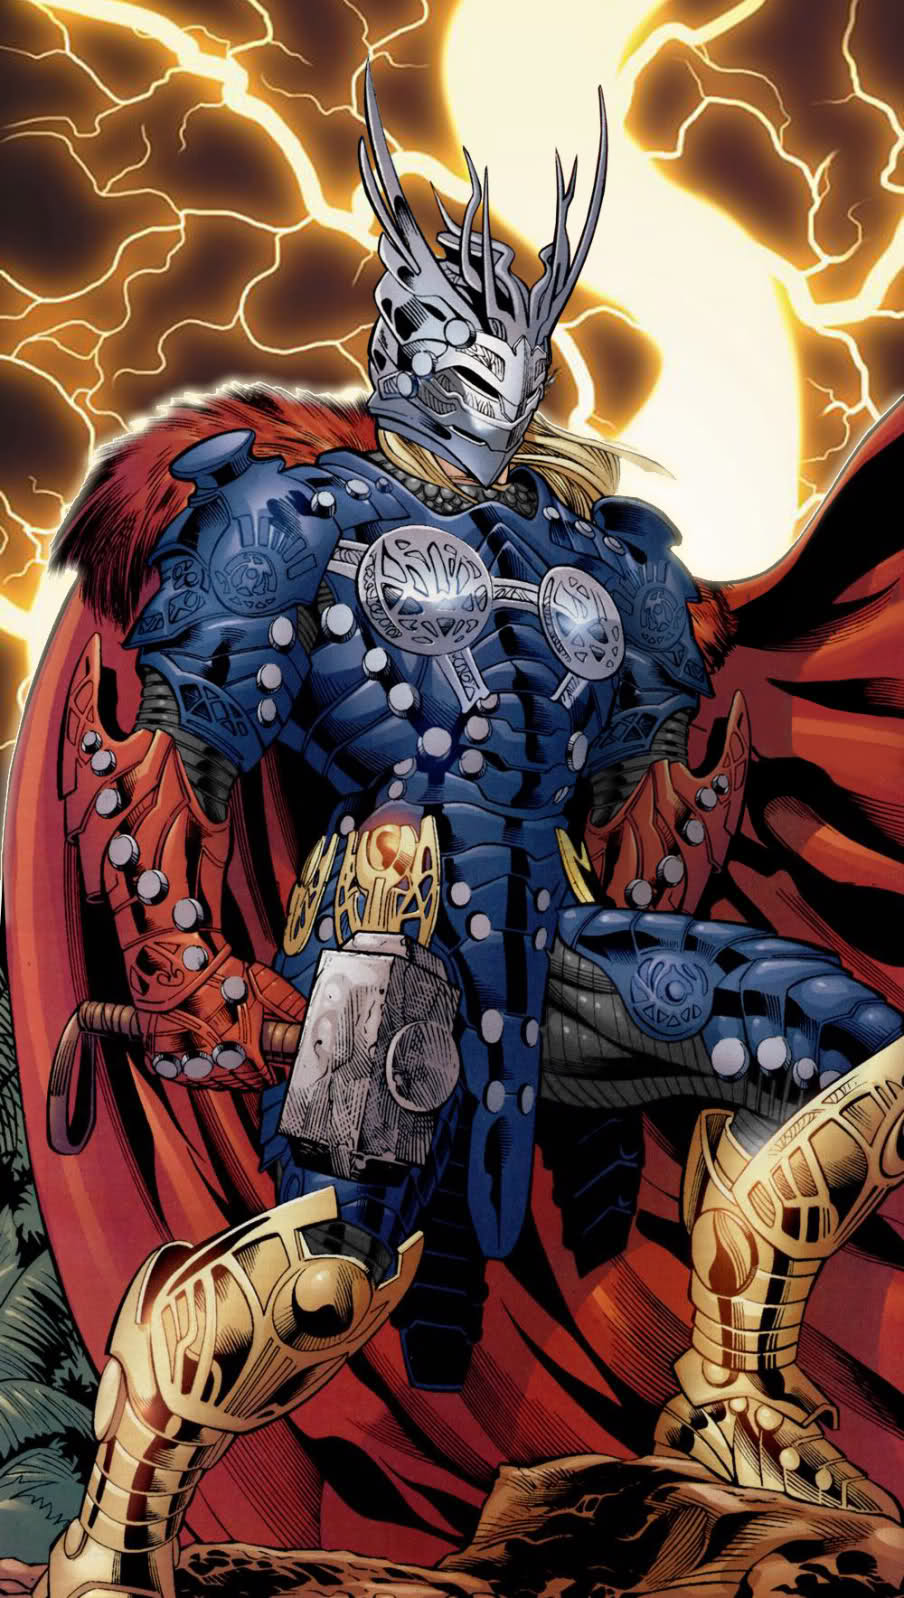 Alan FN on X: Thor arrives in Midgard. Fan art by me #GodOfWarRagnarok # Thor  / X